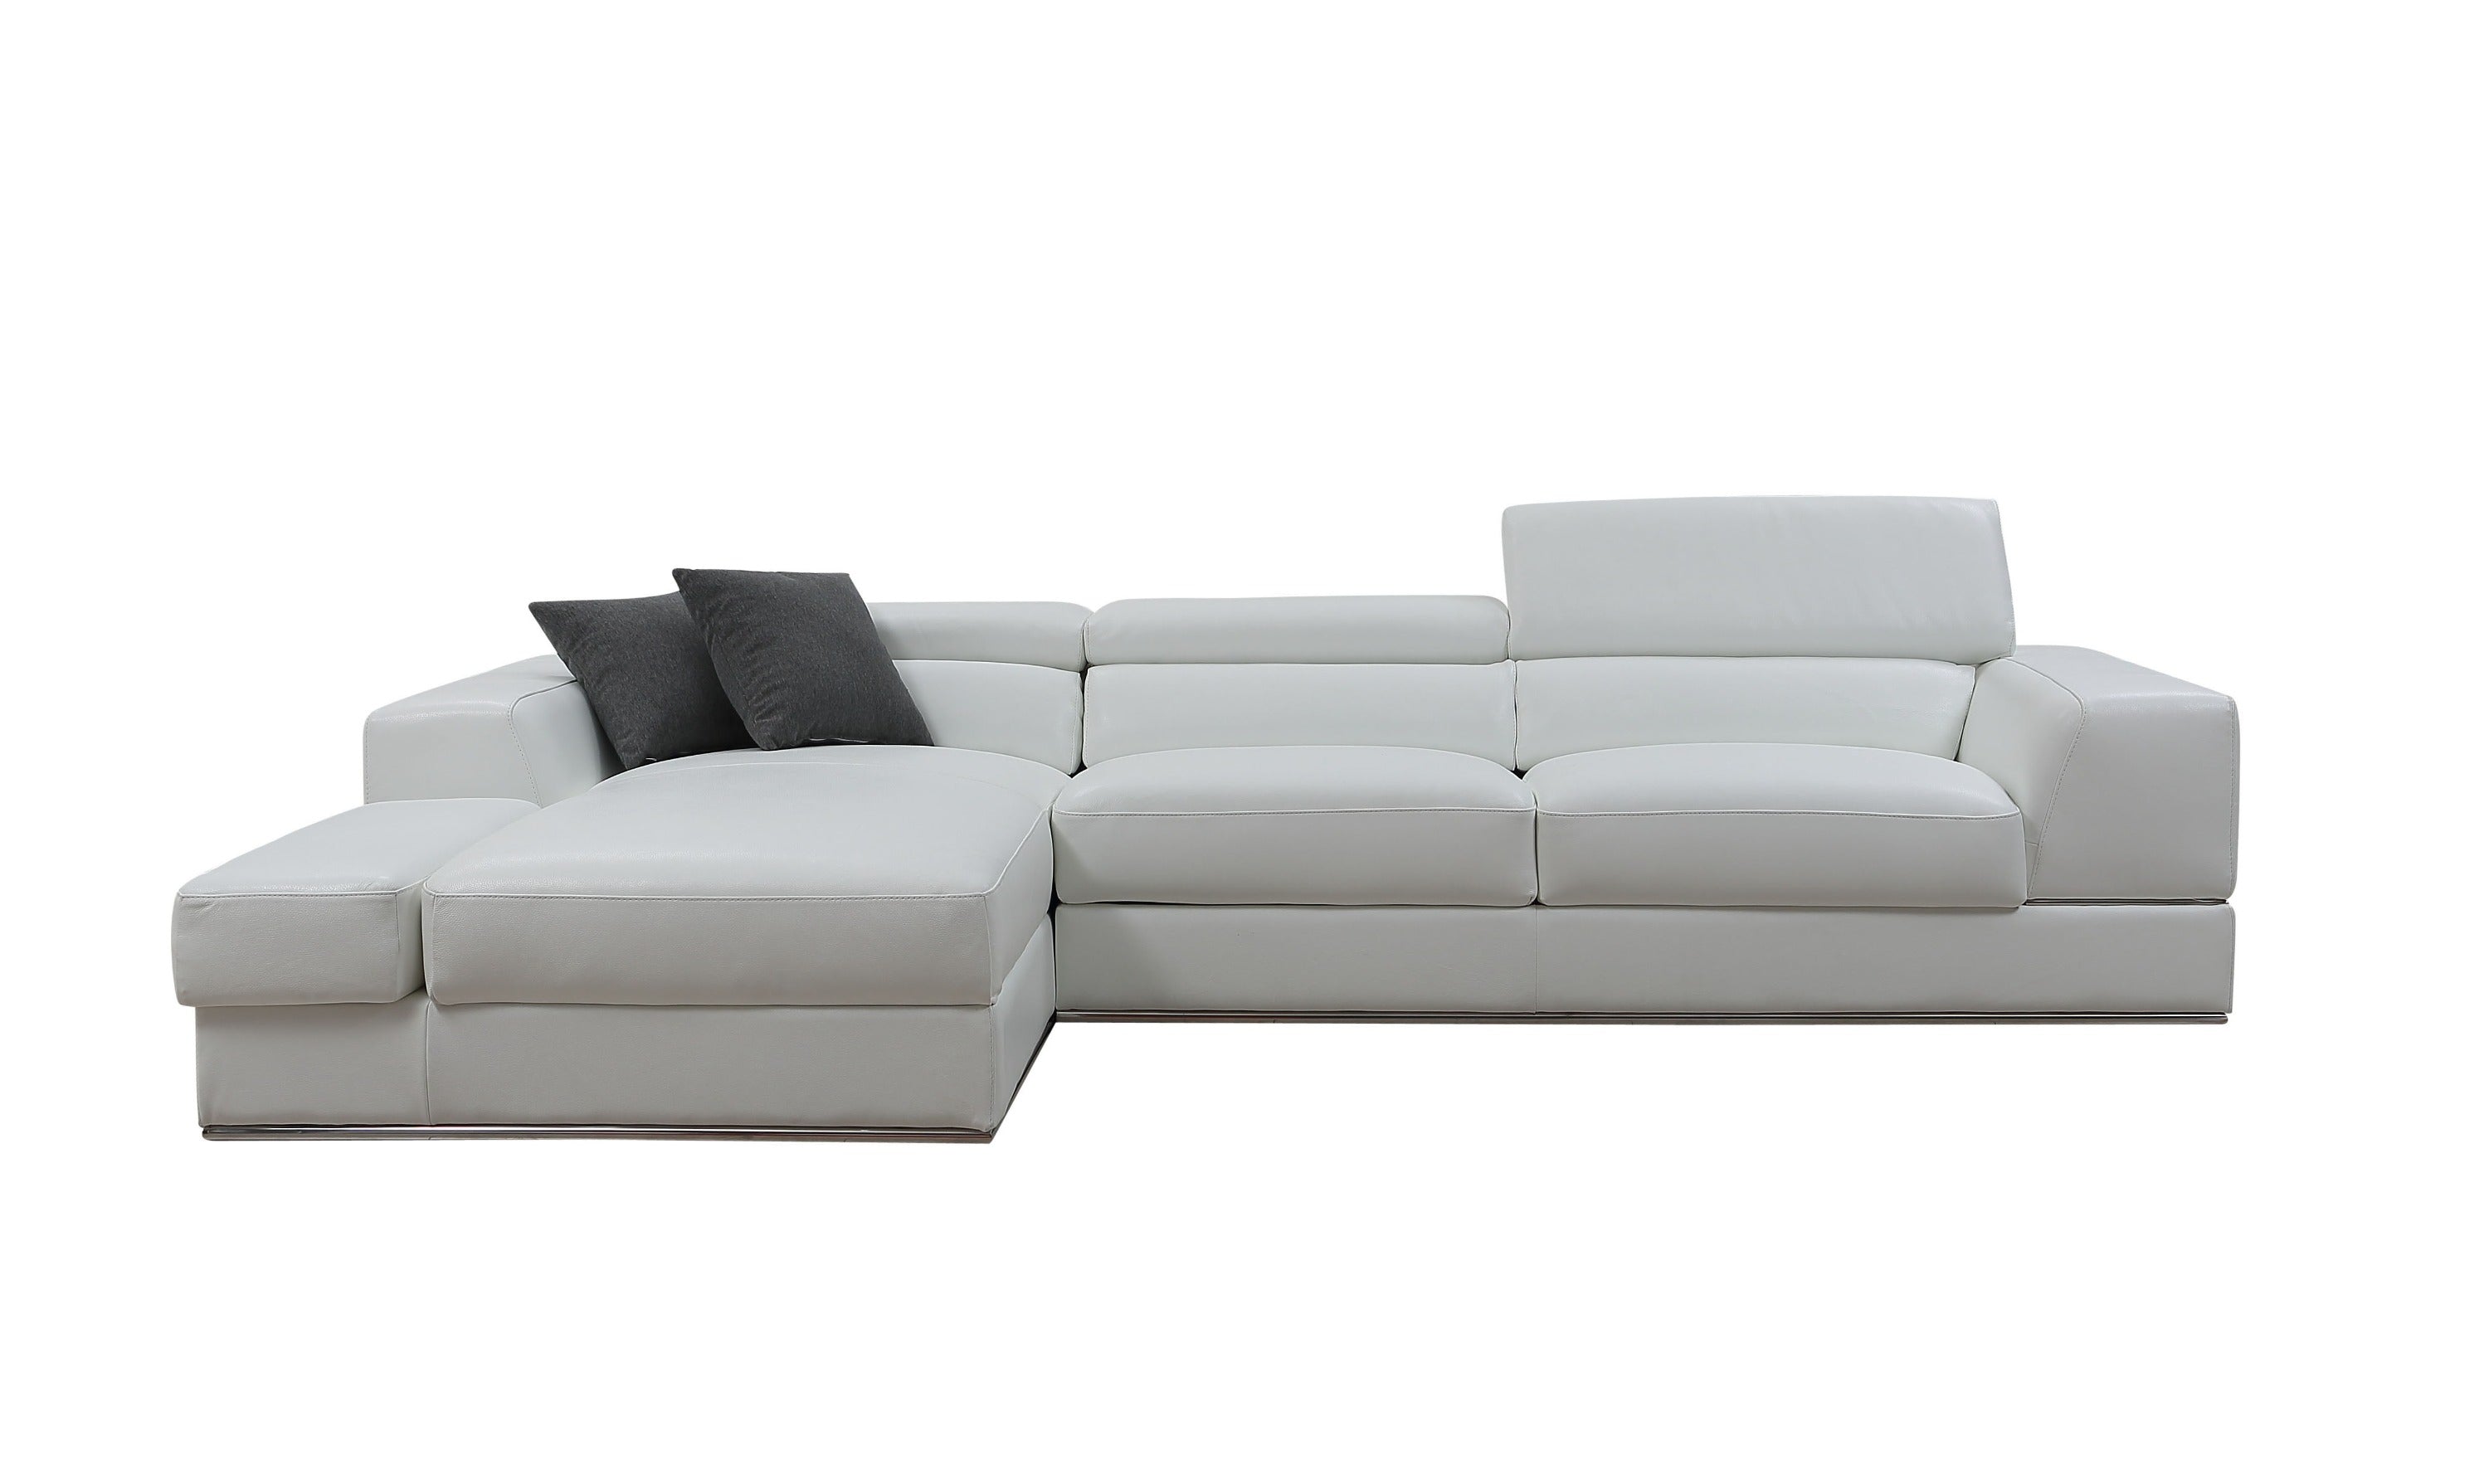 Divani Casa Pella Mini - Modern Leather Left Facing Sectional Sofa-Sectional Sofa-VIG-Wall2Wall Furnishings